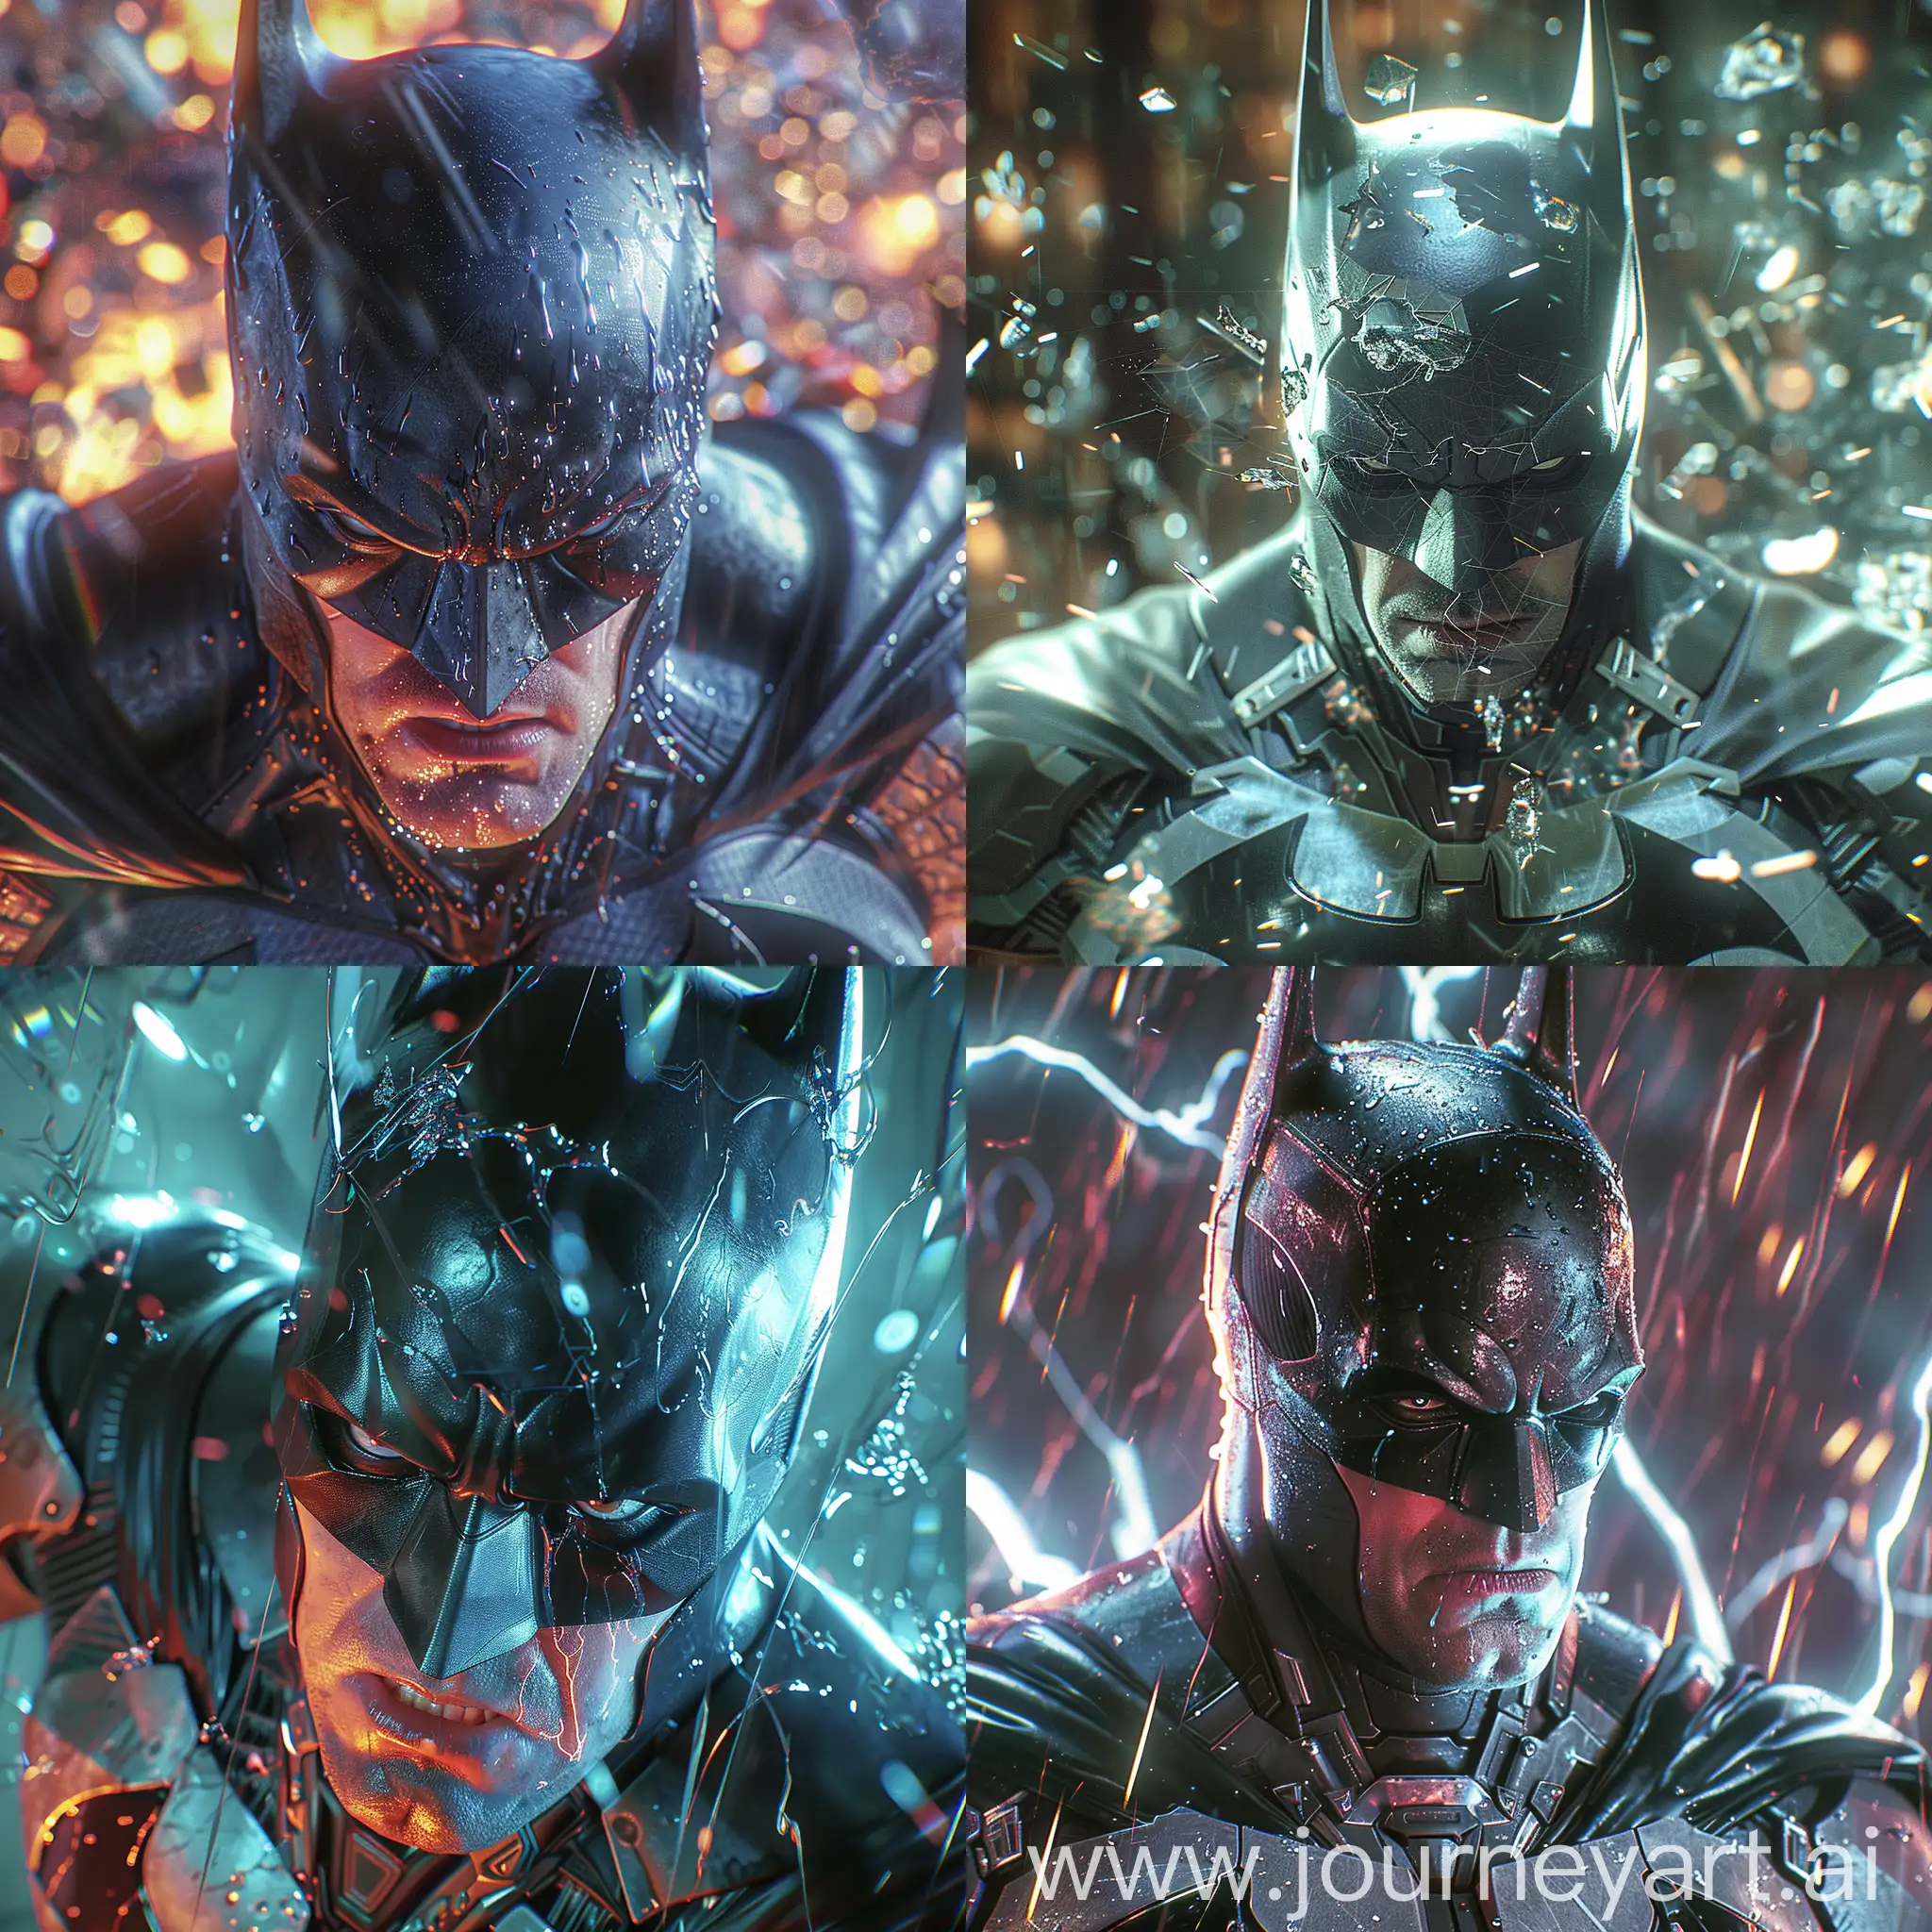 Epic-Batman-in-Vivid-Energy-Explosions-HD-Wallpaper